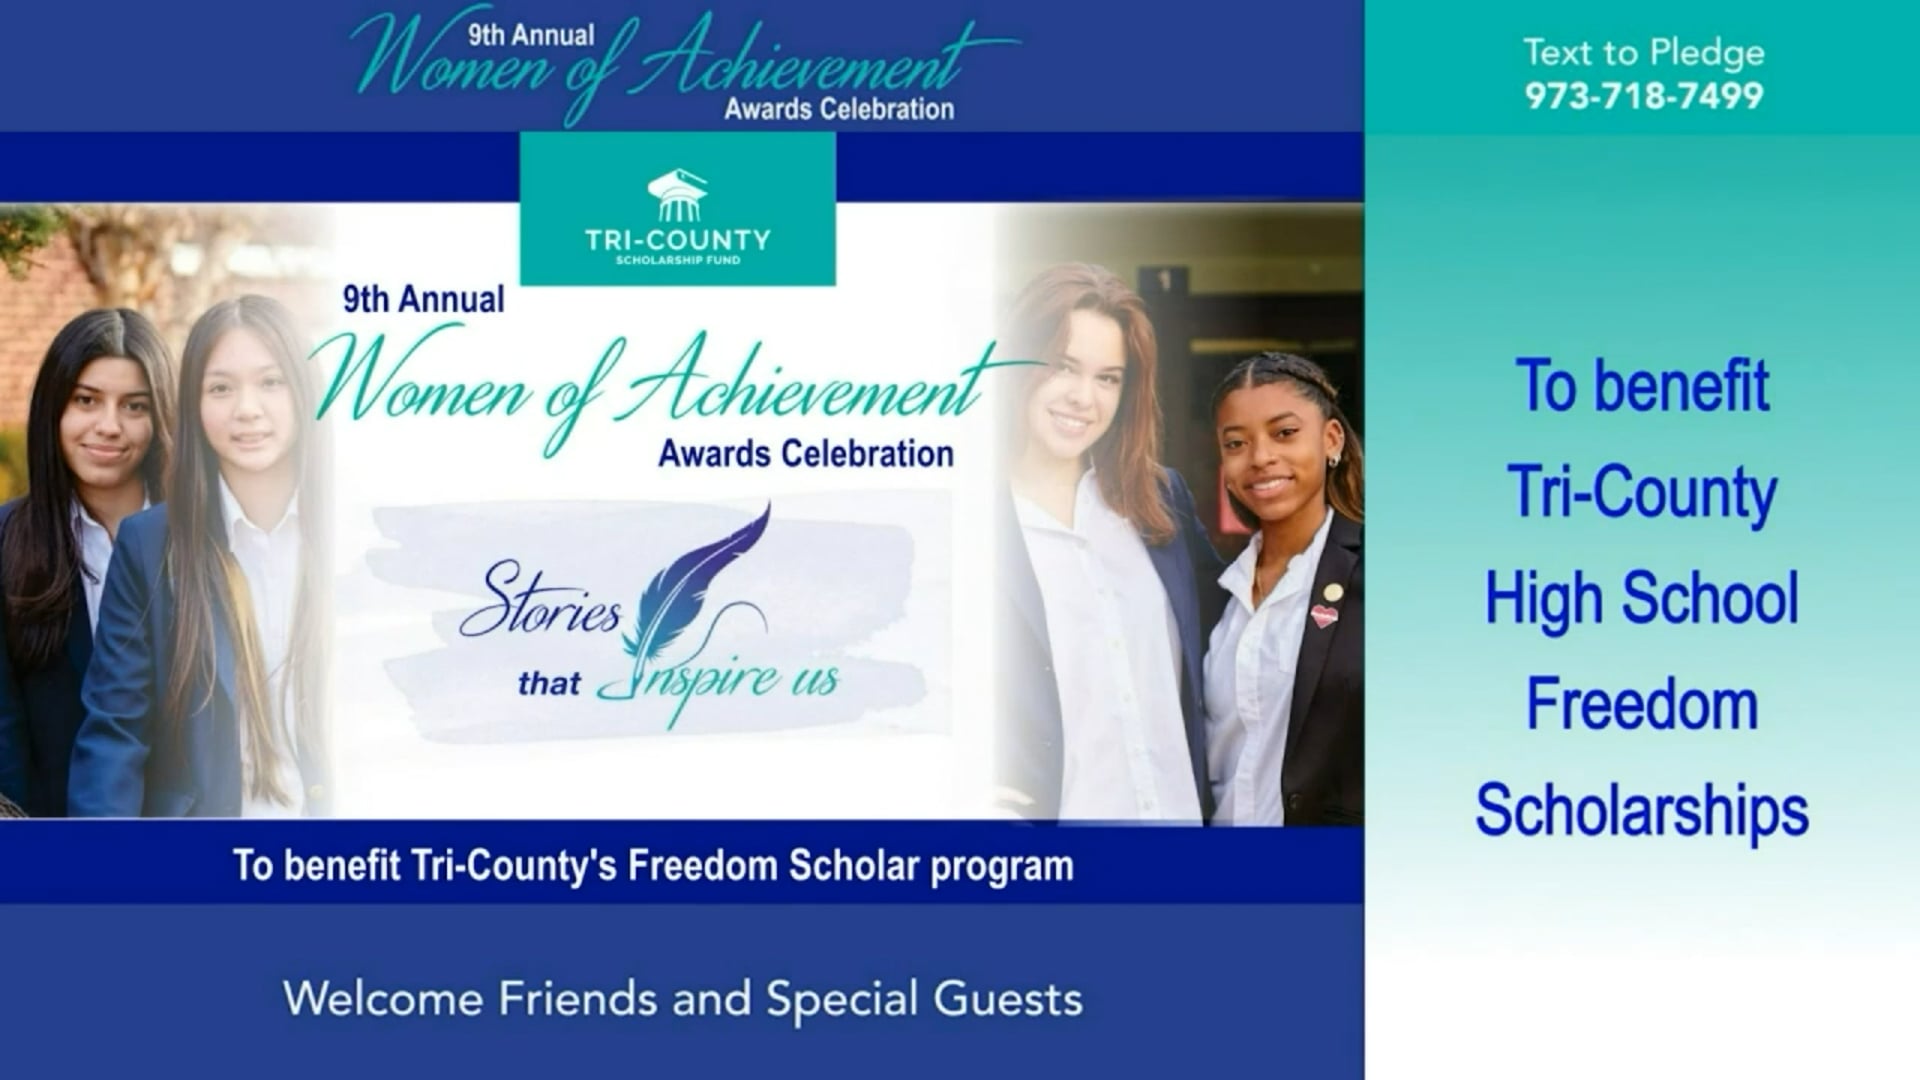 Tri-County Scholarship Fund 9th Annual Women of Achievement Awards Celebration